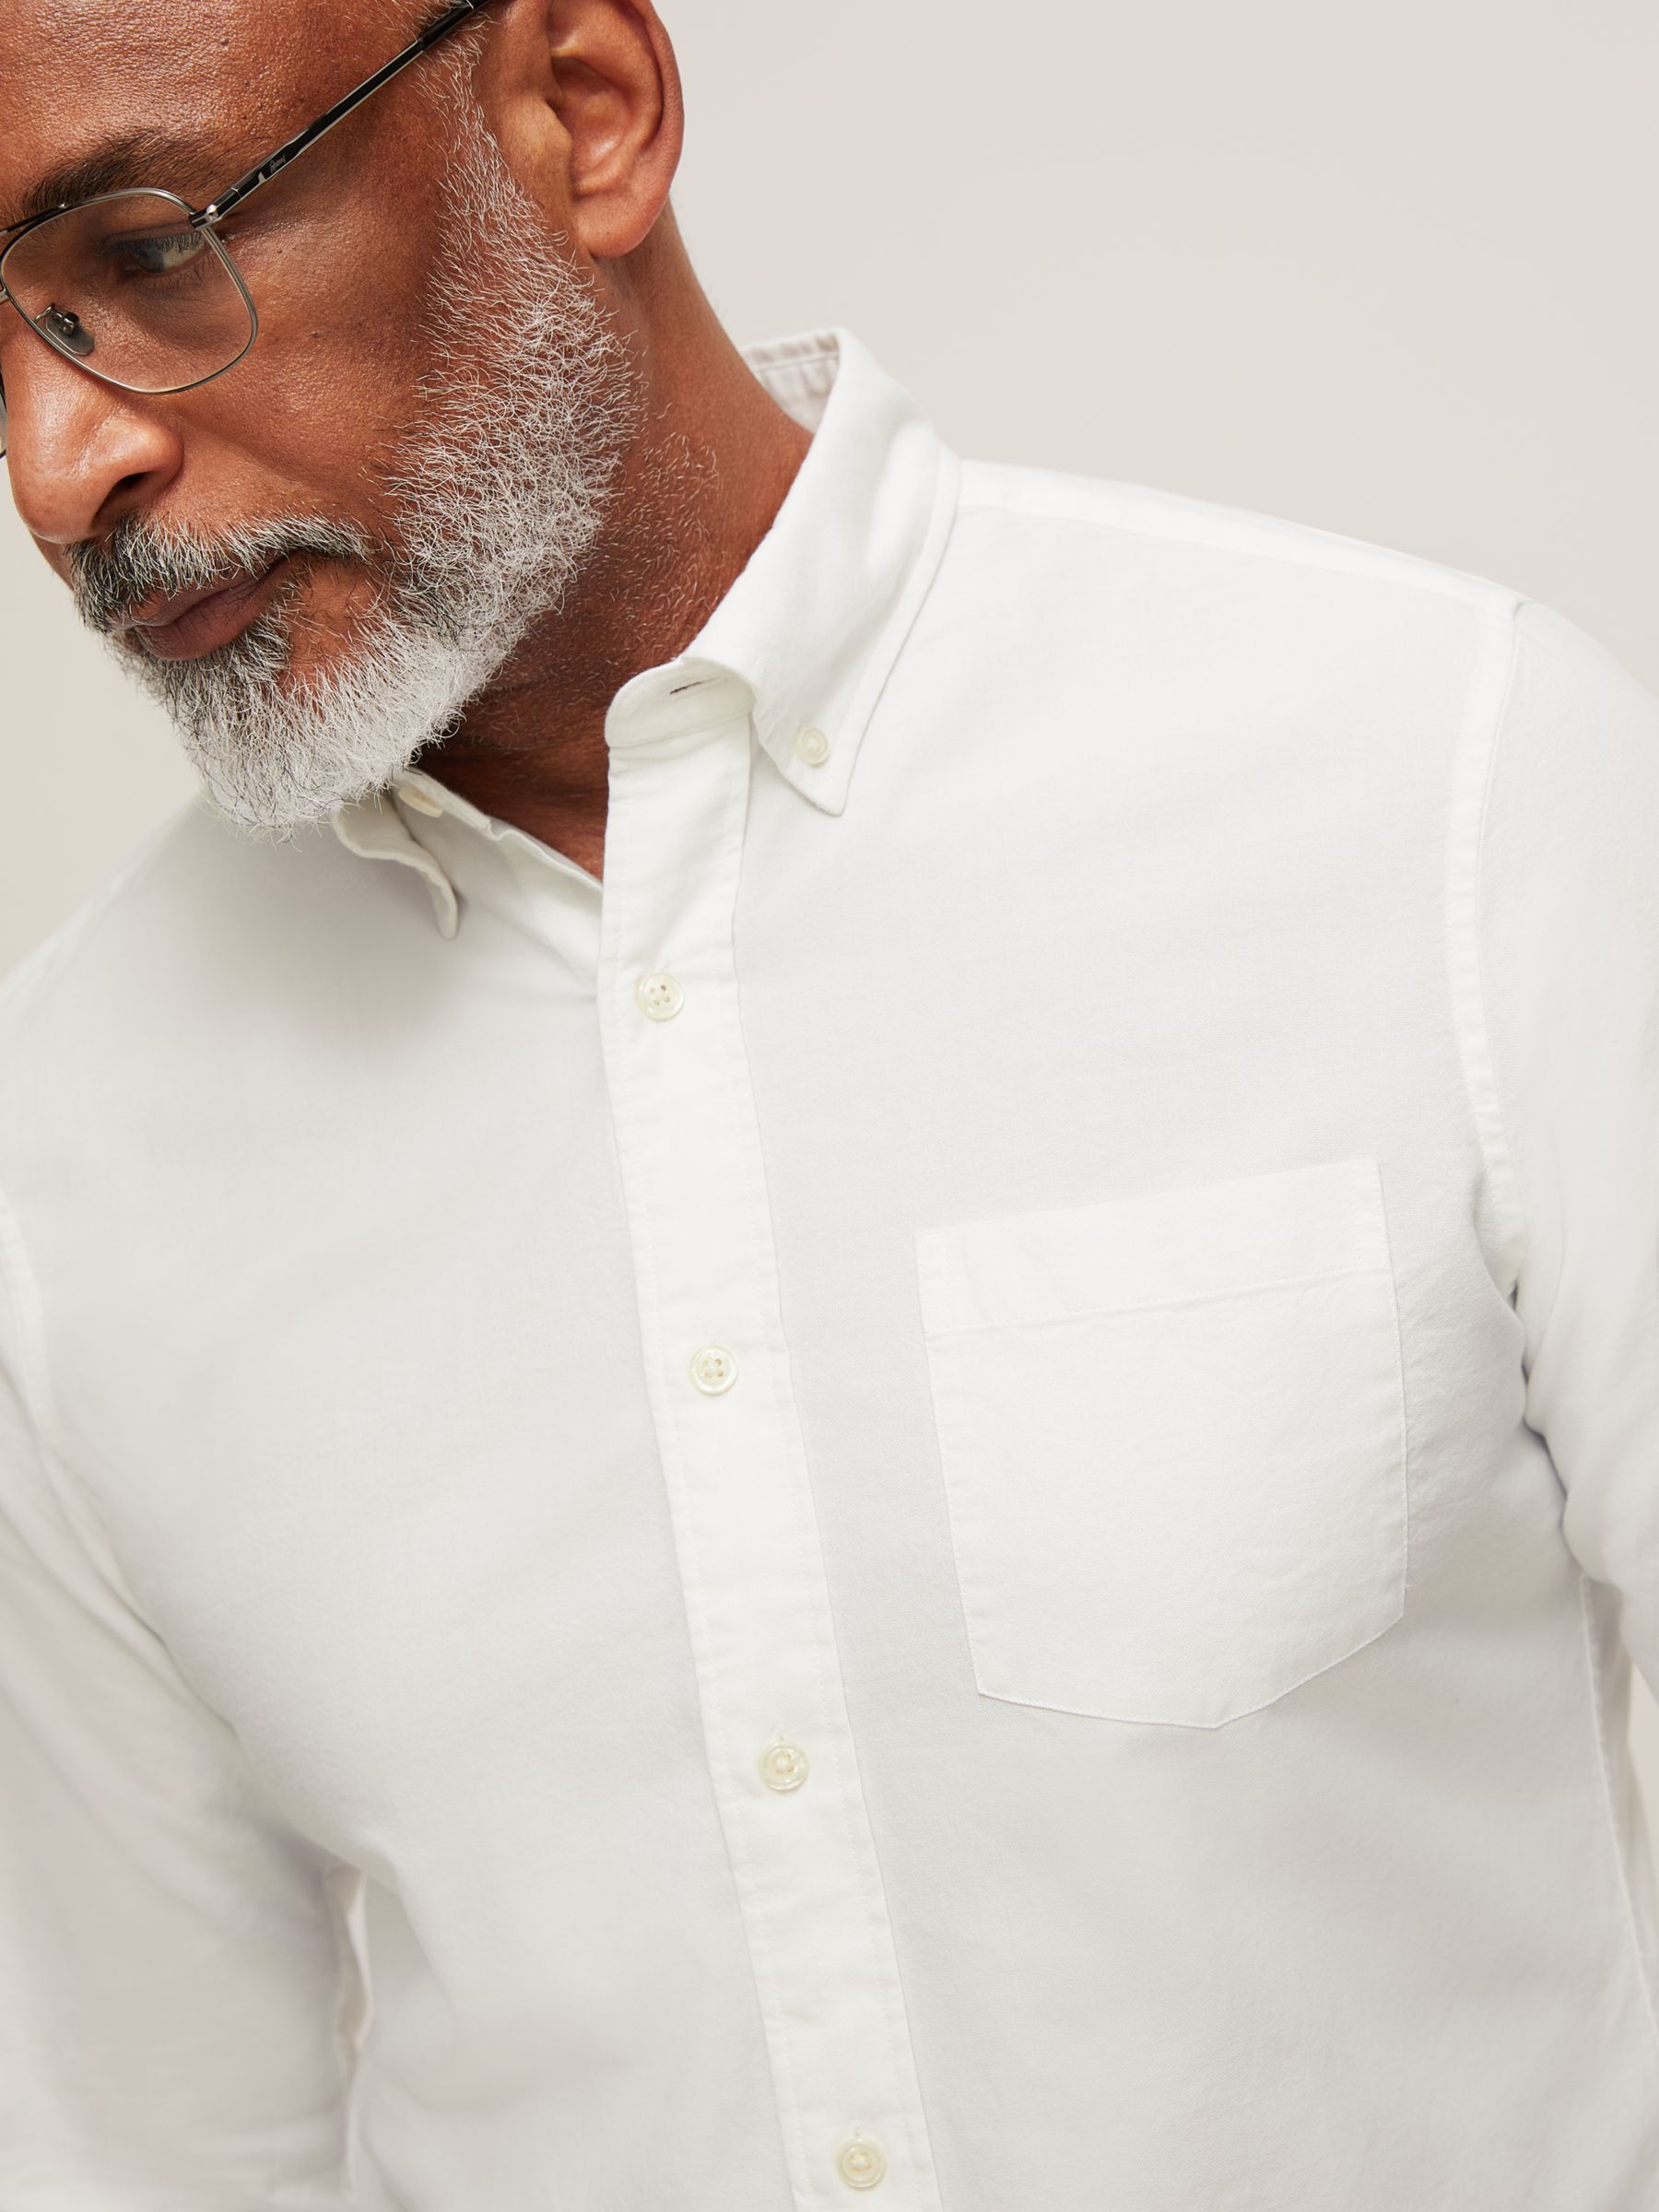 John Lewis Regular Fit Cotton Oxford Button Down Shirt, White, S